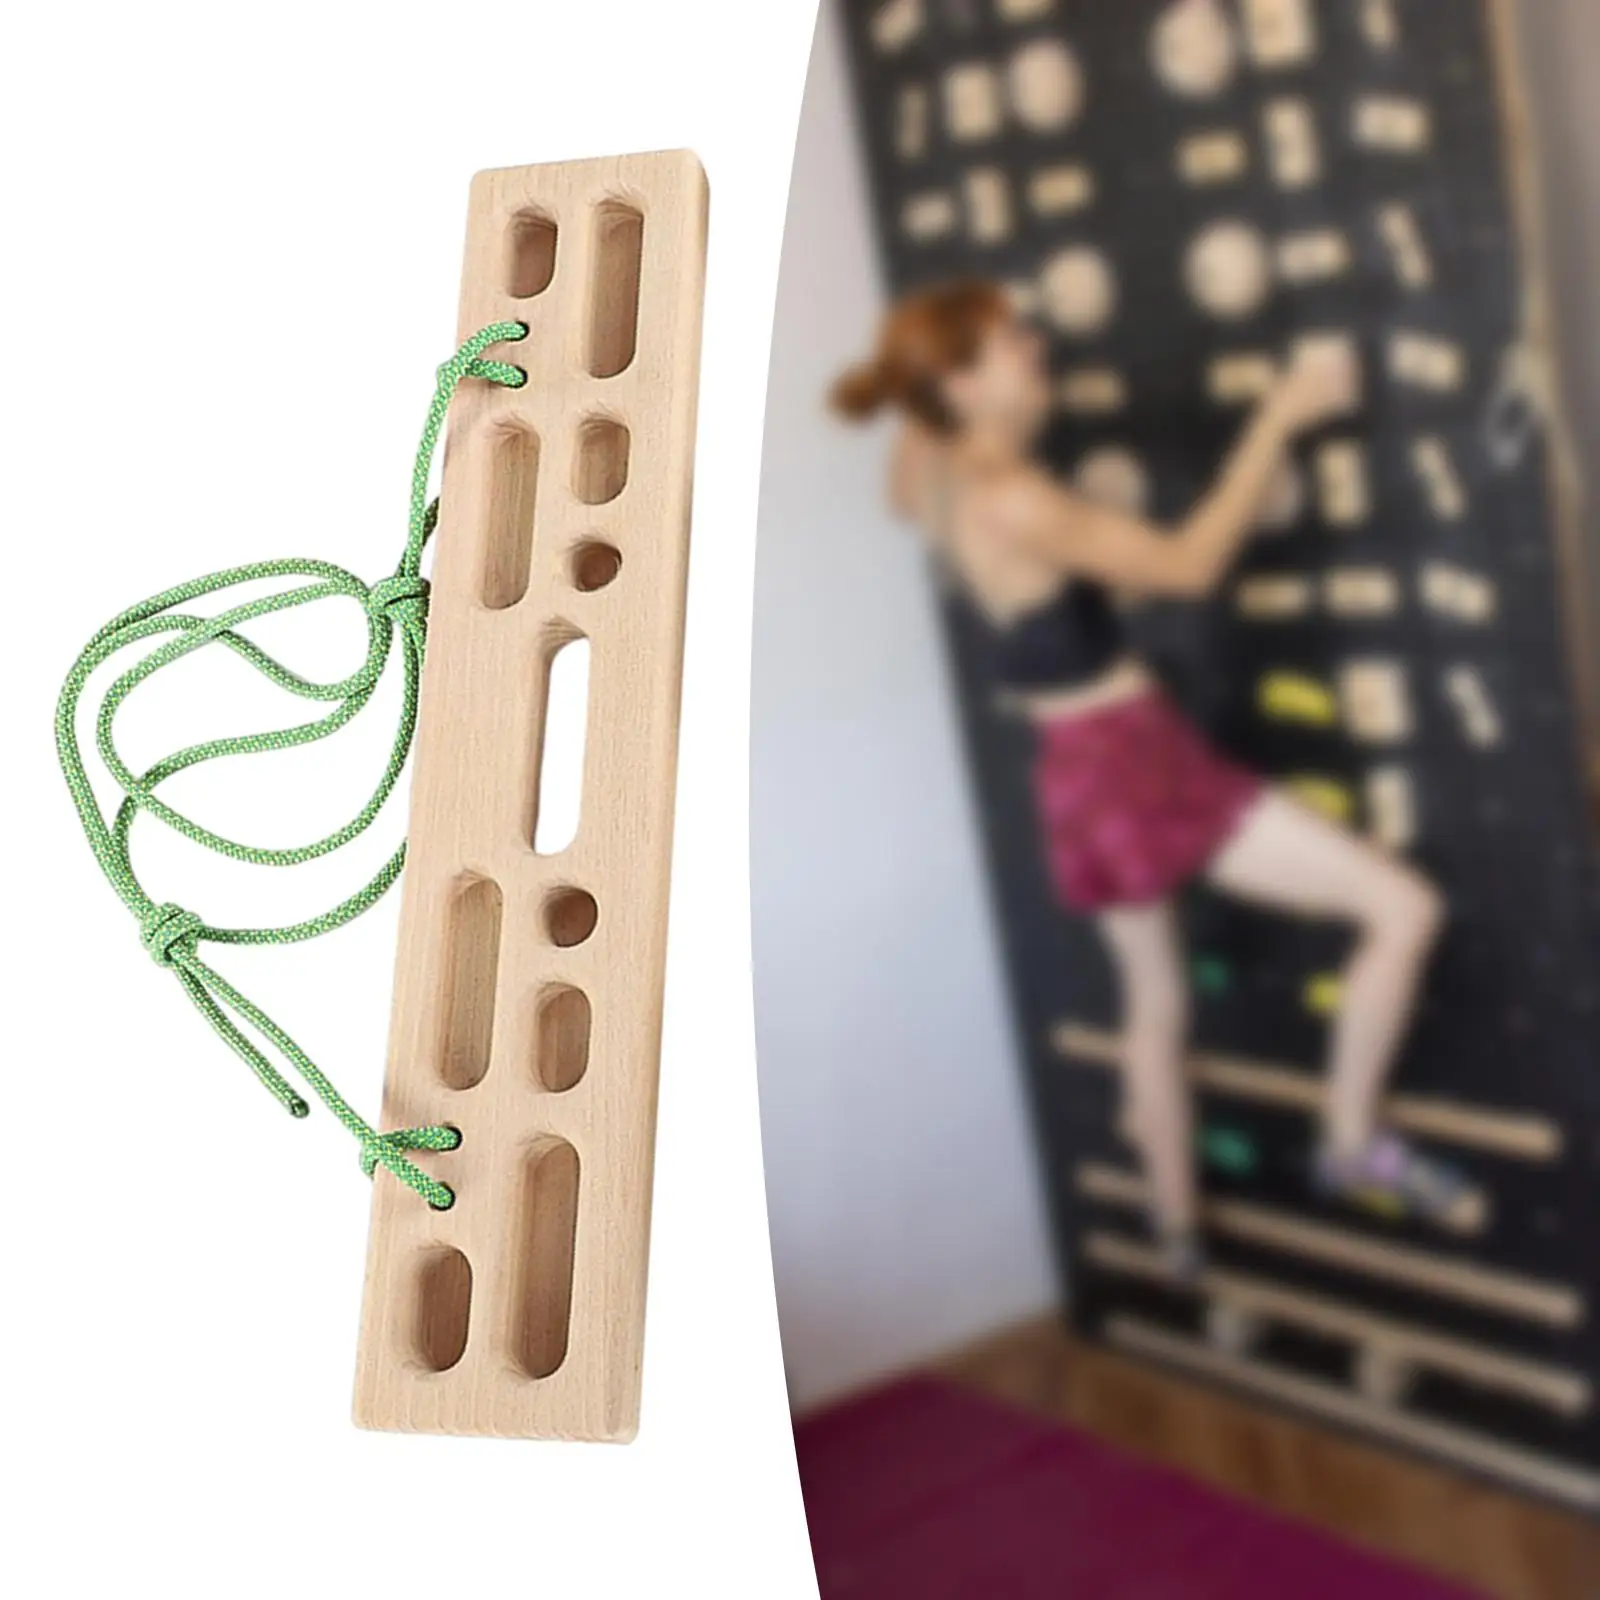 Climbing Hangboard Climbing Fingerboard Building Core Strength Exerciser Hang Board for Wall Climbers Doorway Athletes Outdoor